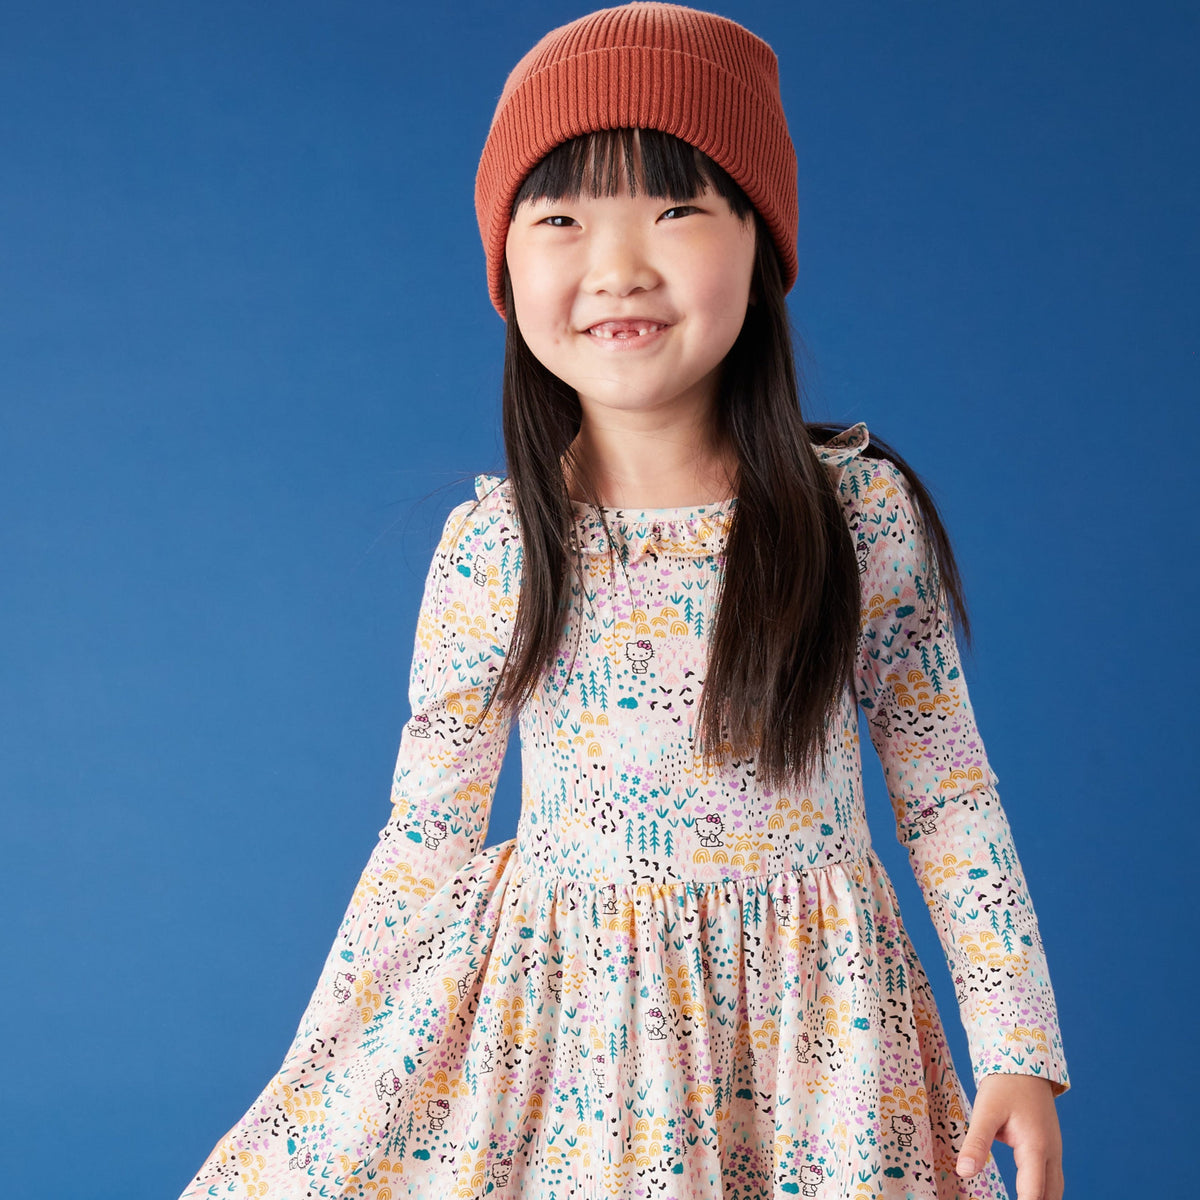 Kitty Hello Childrens Girls Kids Wallet Heart Cute Fashionable Sanrio  Sanrio Character Wallet